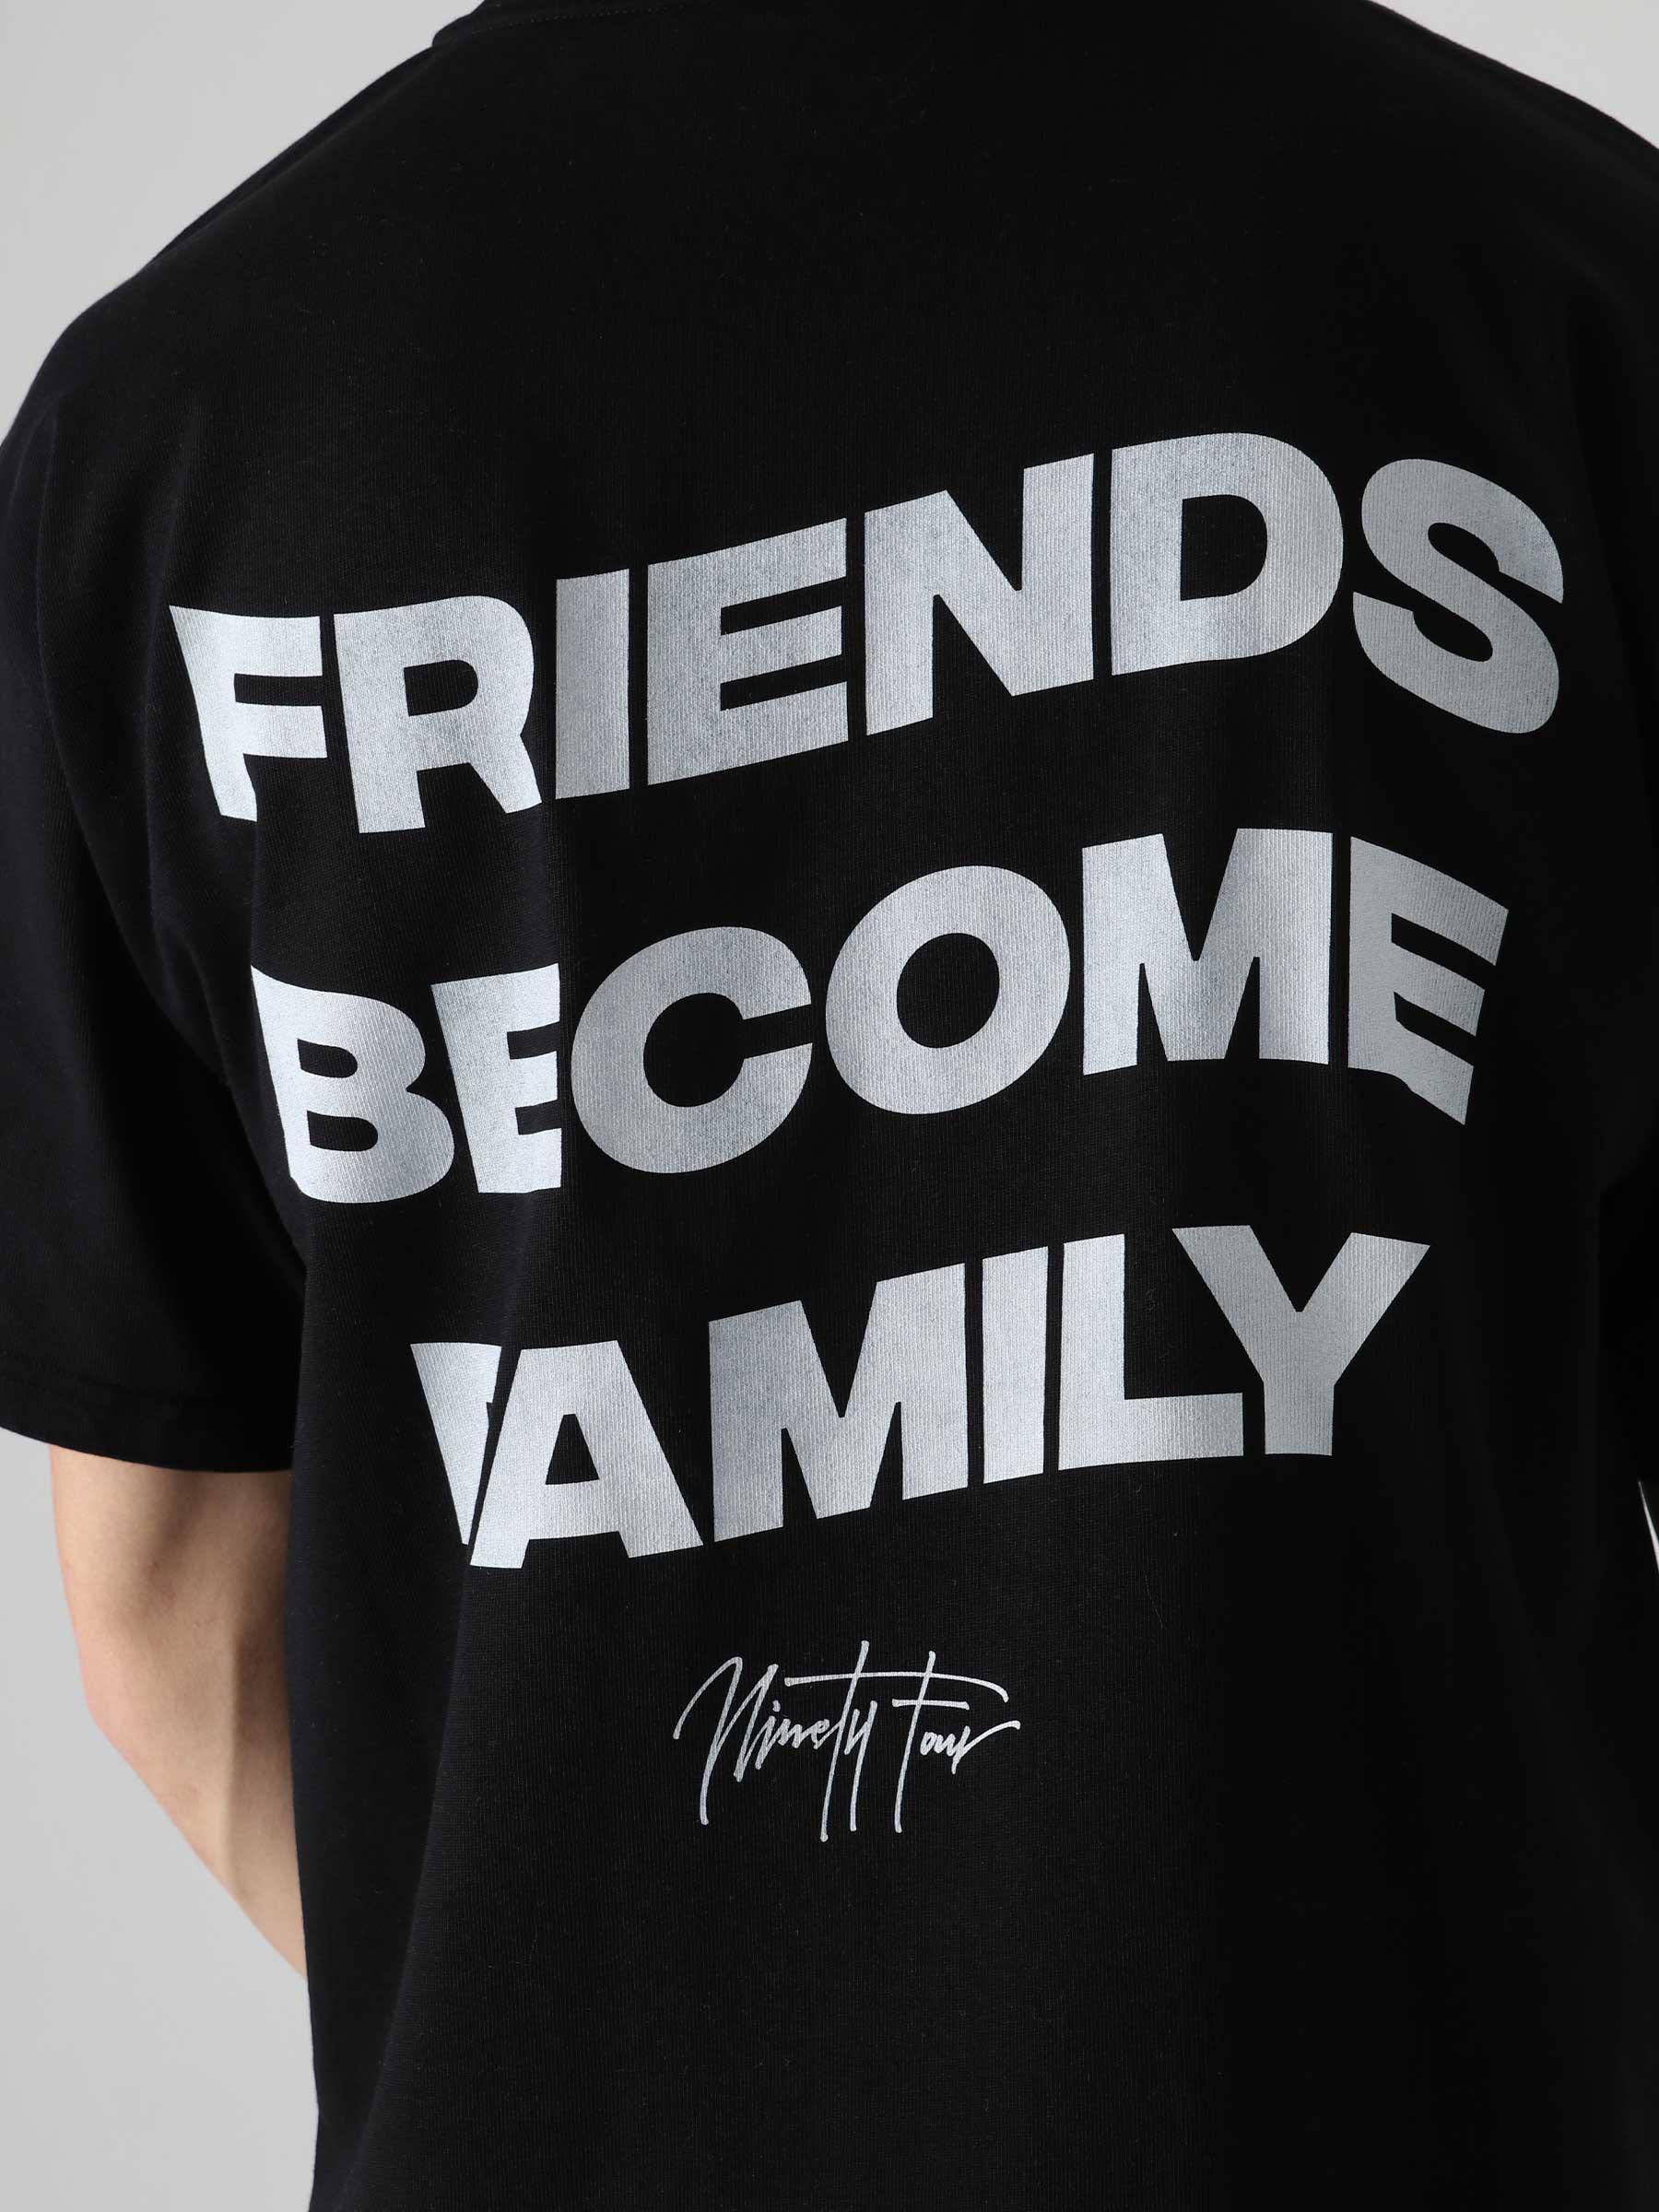 FBF Studios T-Shirt Black White